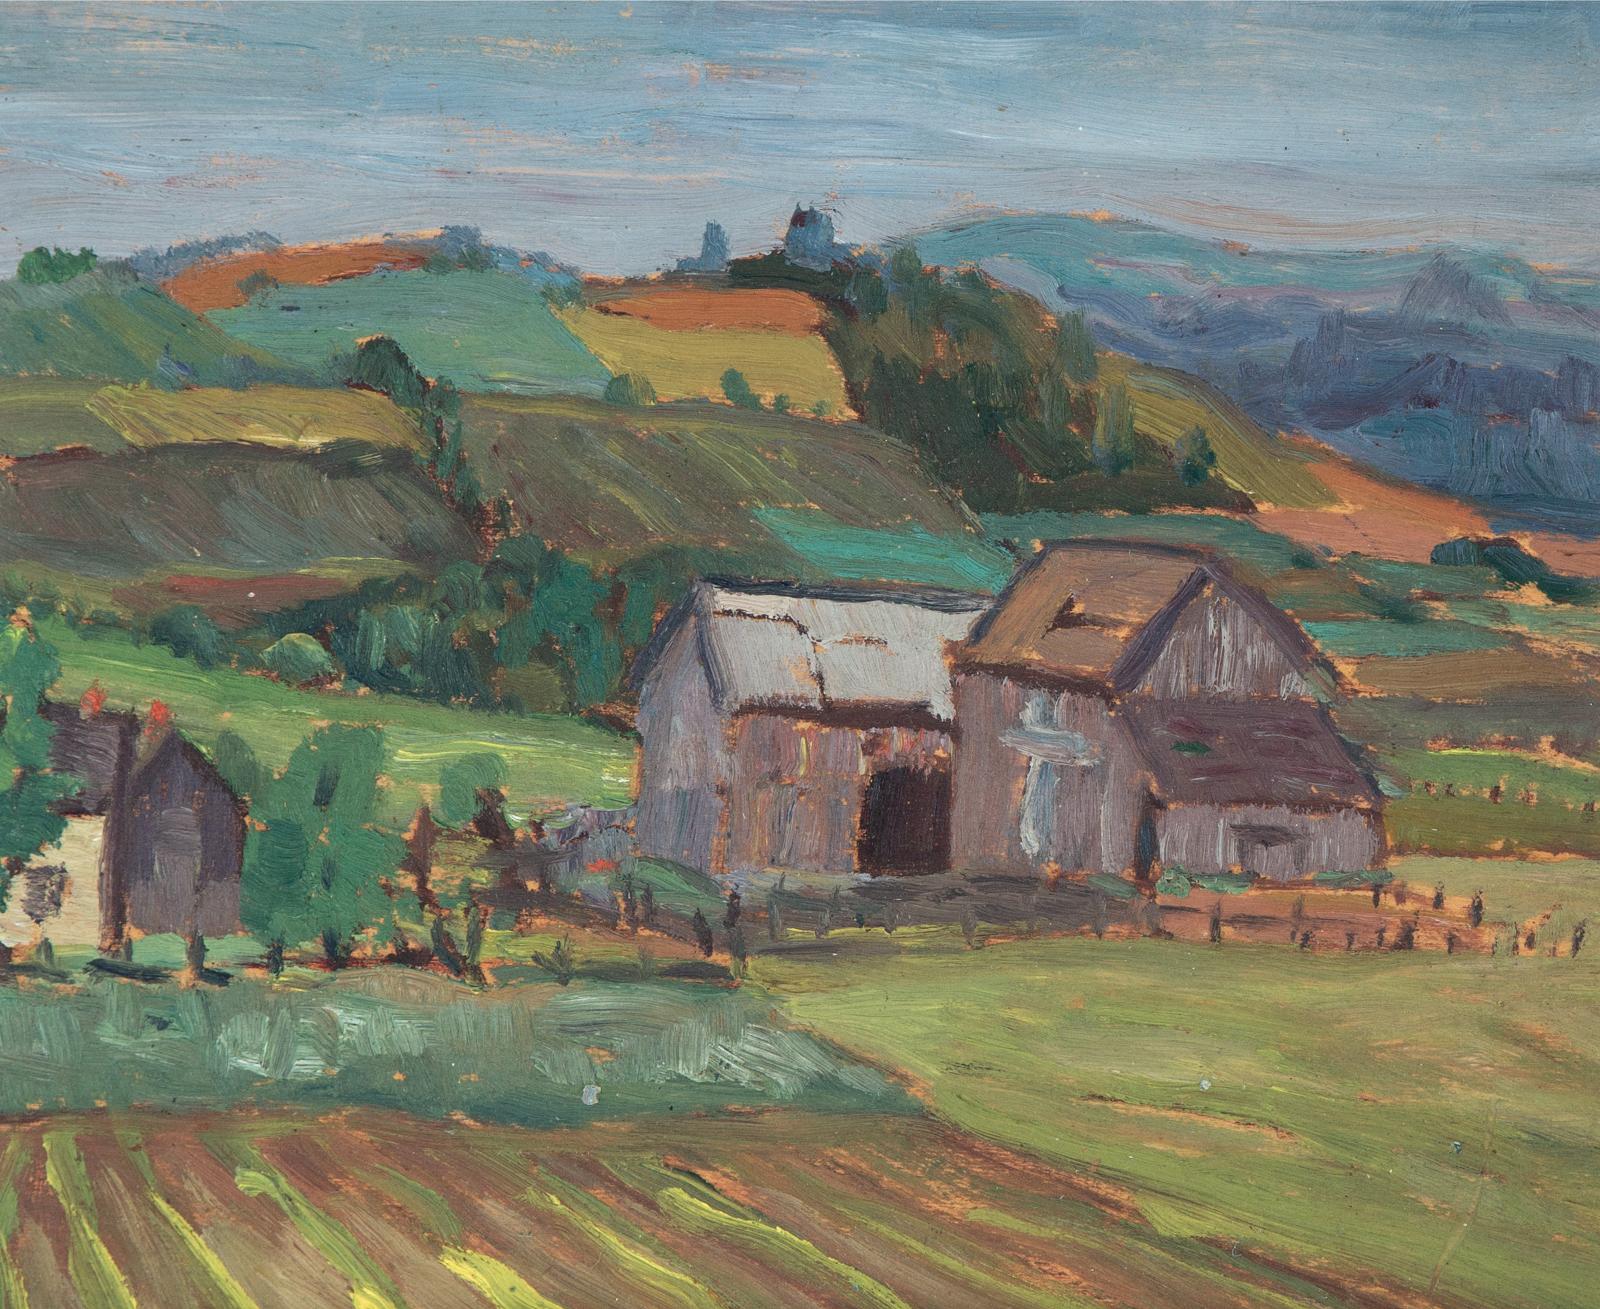 Sir Frederick Grant Banting (1891-1941) - A Farm, Summer